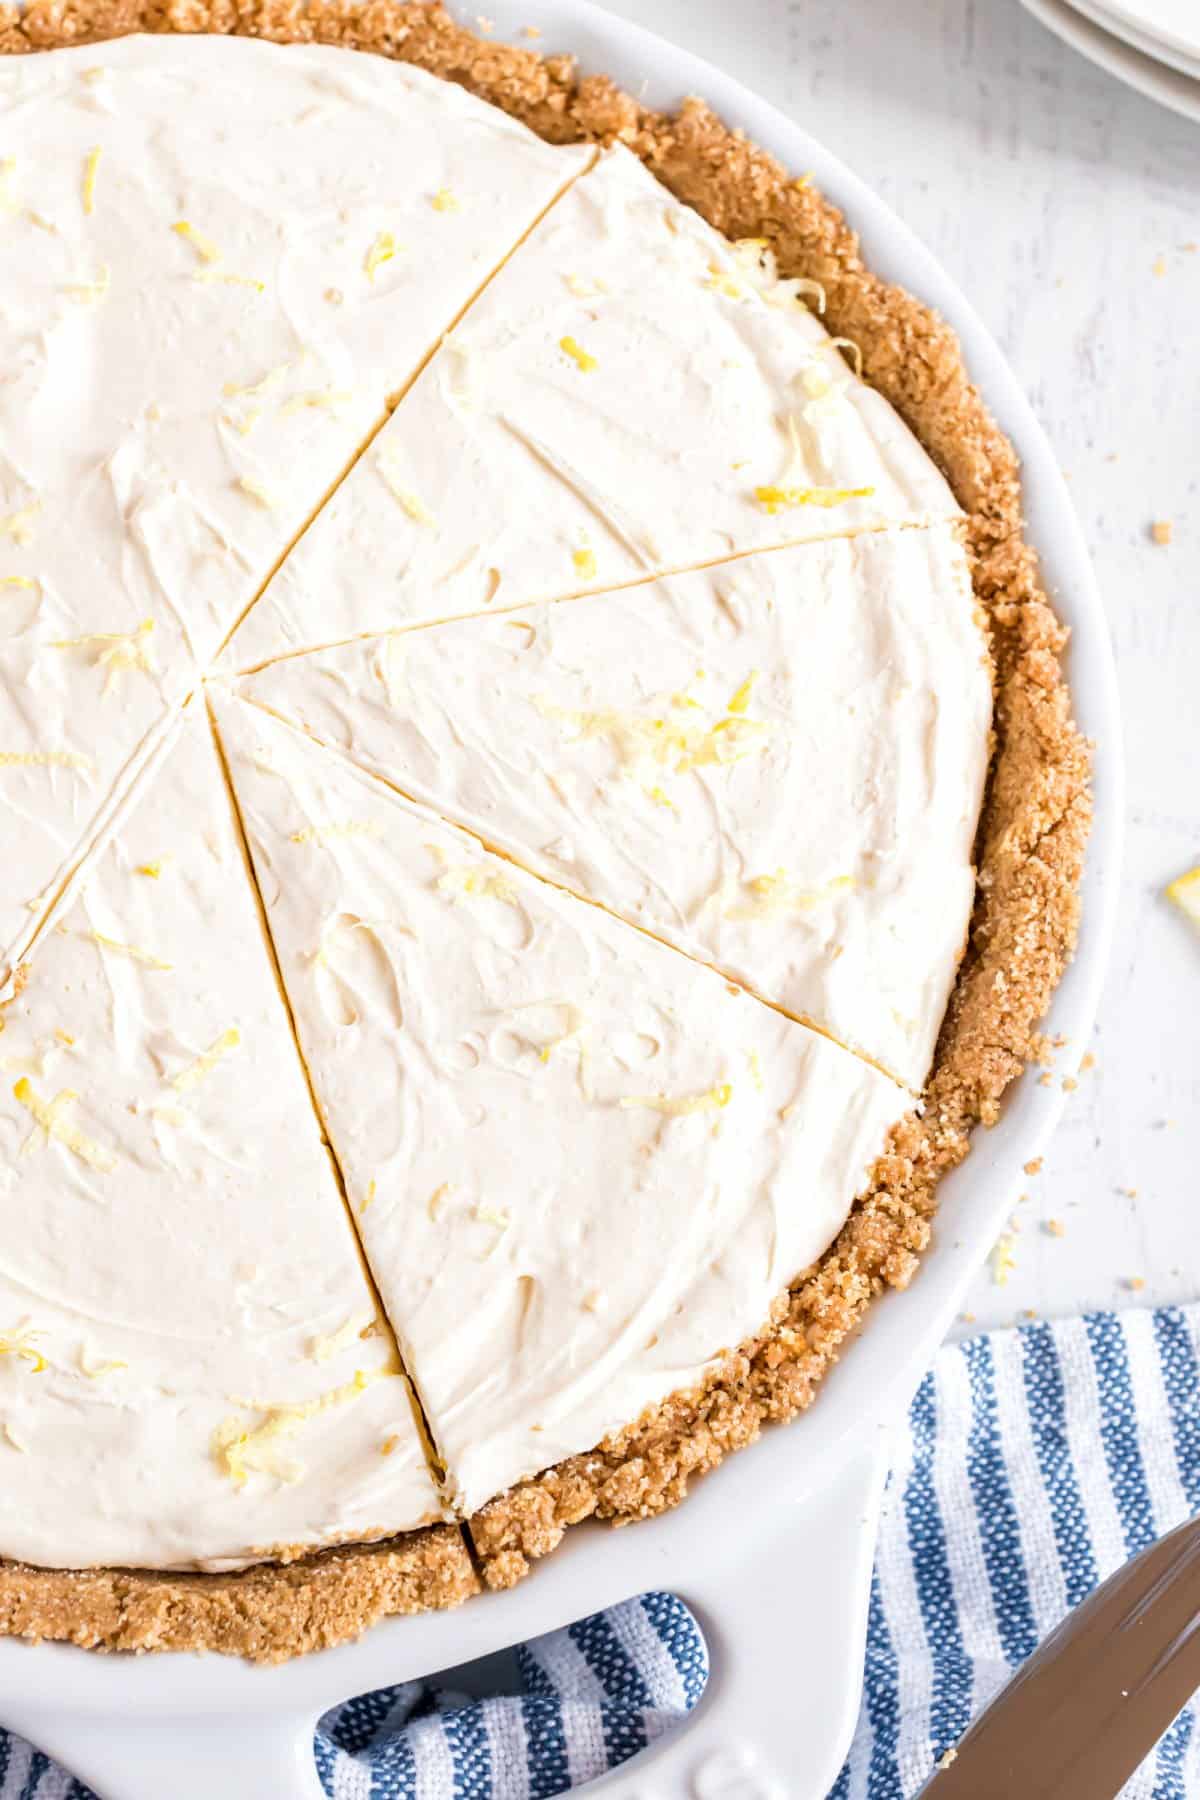 No bake lemon cheesecake cut into slices.